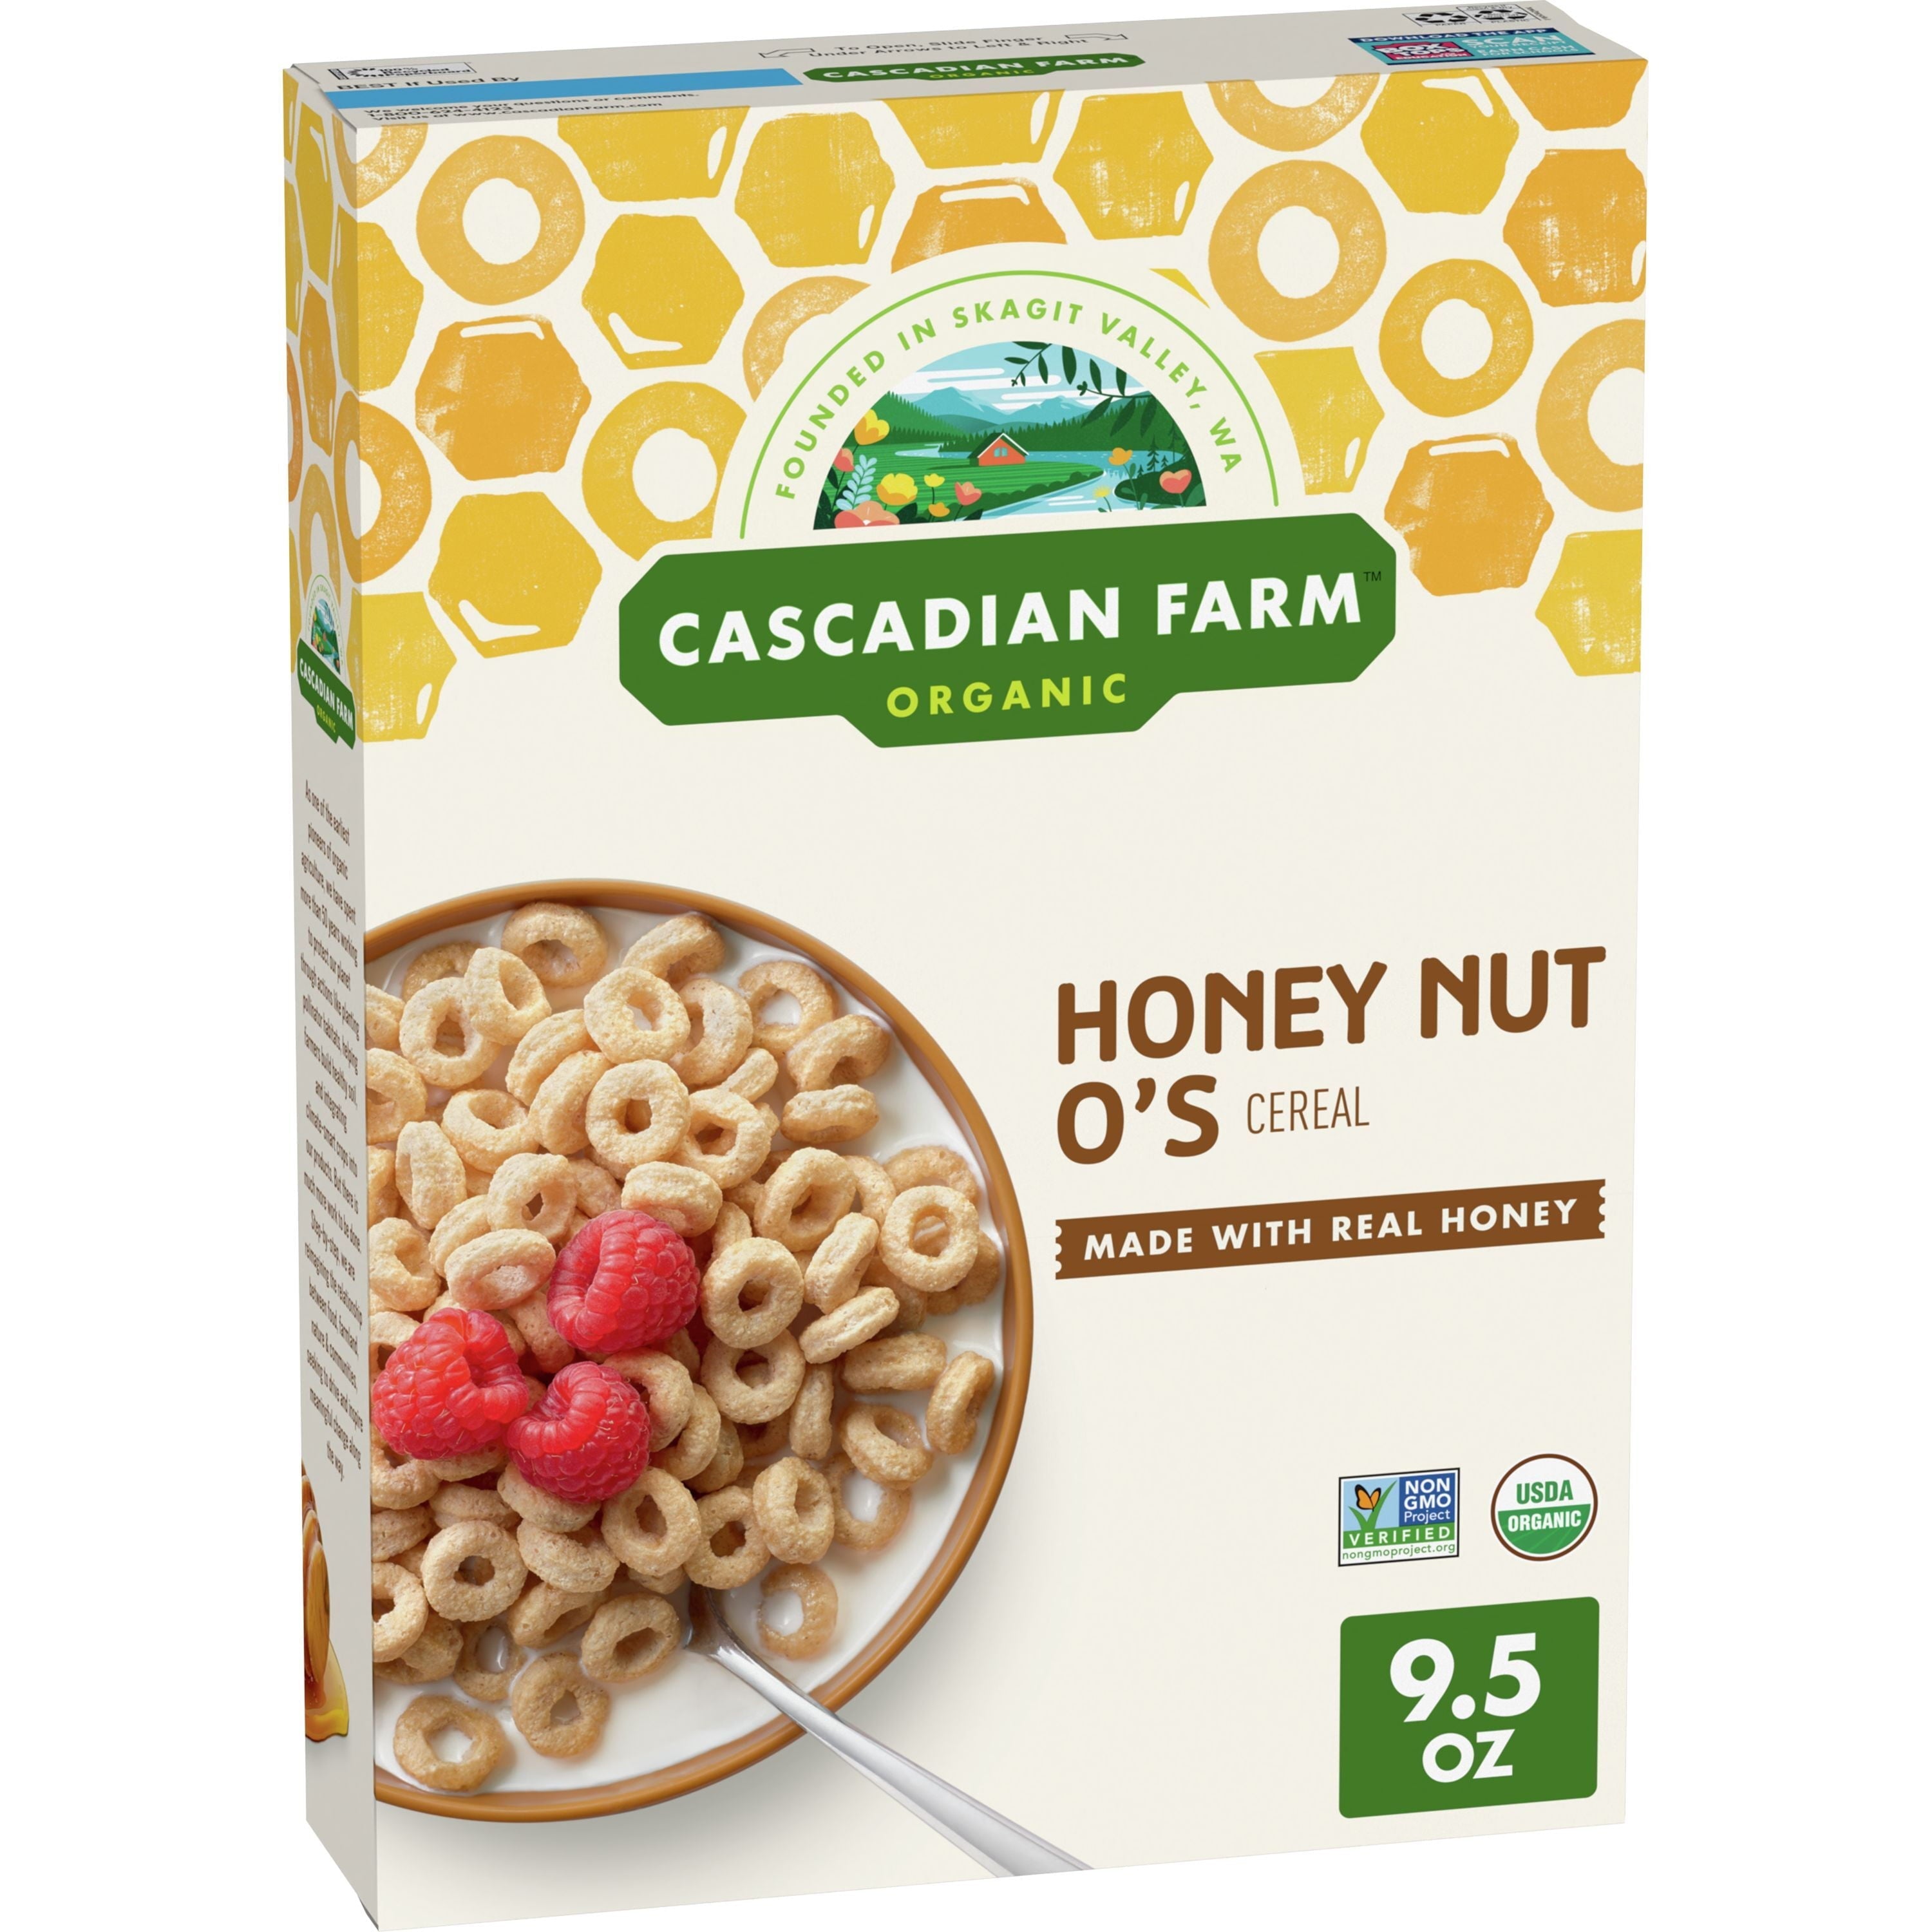 Cascadian Farms Organic Honey Nut O's Cereal 9.5 Oz Box